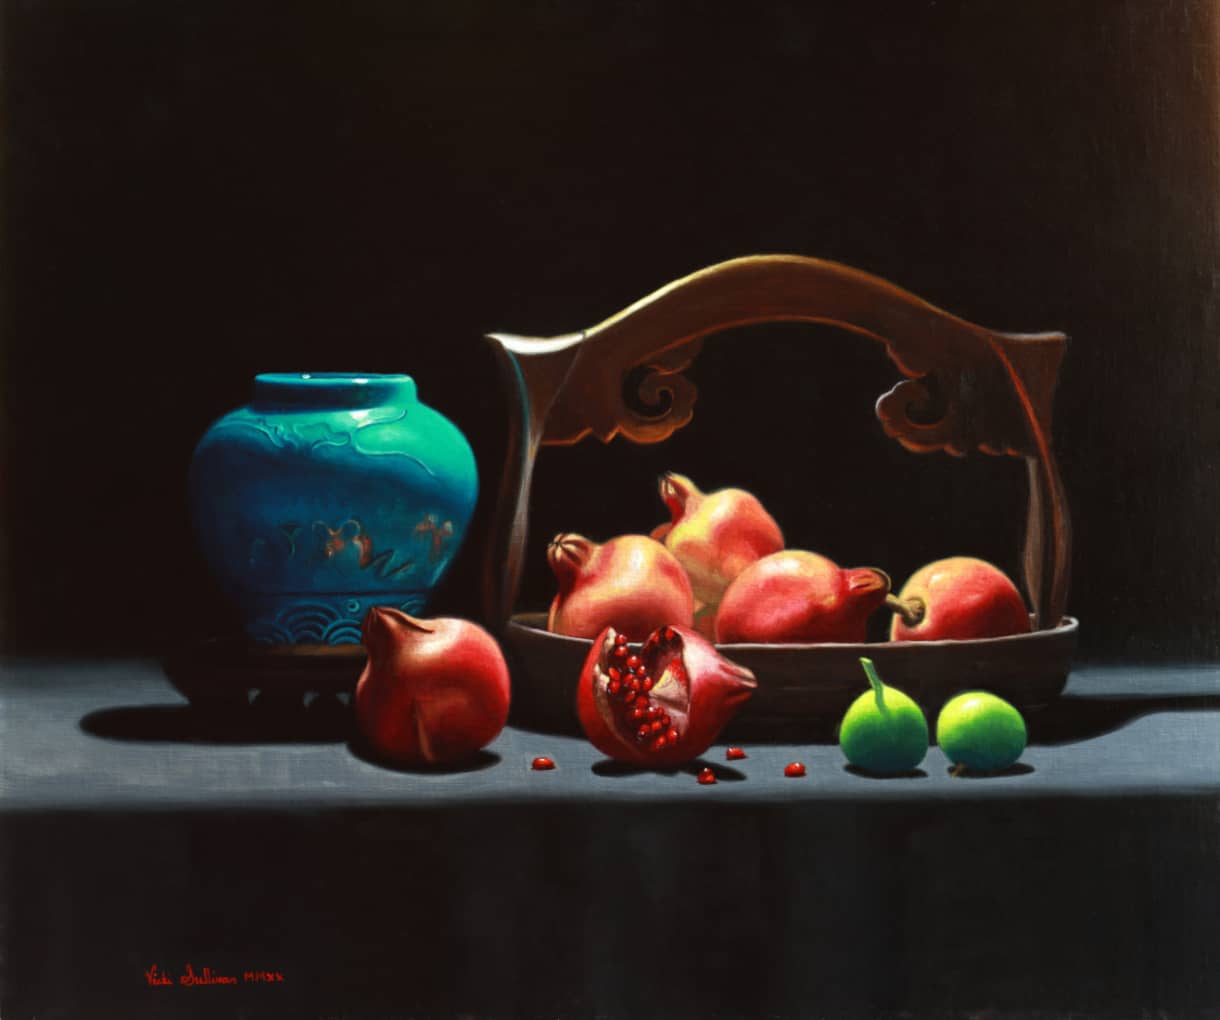 Vicki Sullivan Painting ~ 'Pomegranates and Figs' - Curate Art & Design Gallery Sorrento Mornington Peninsula Melbourne